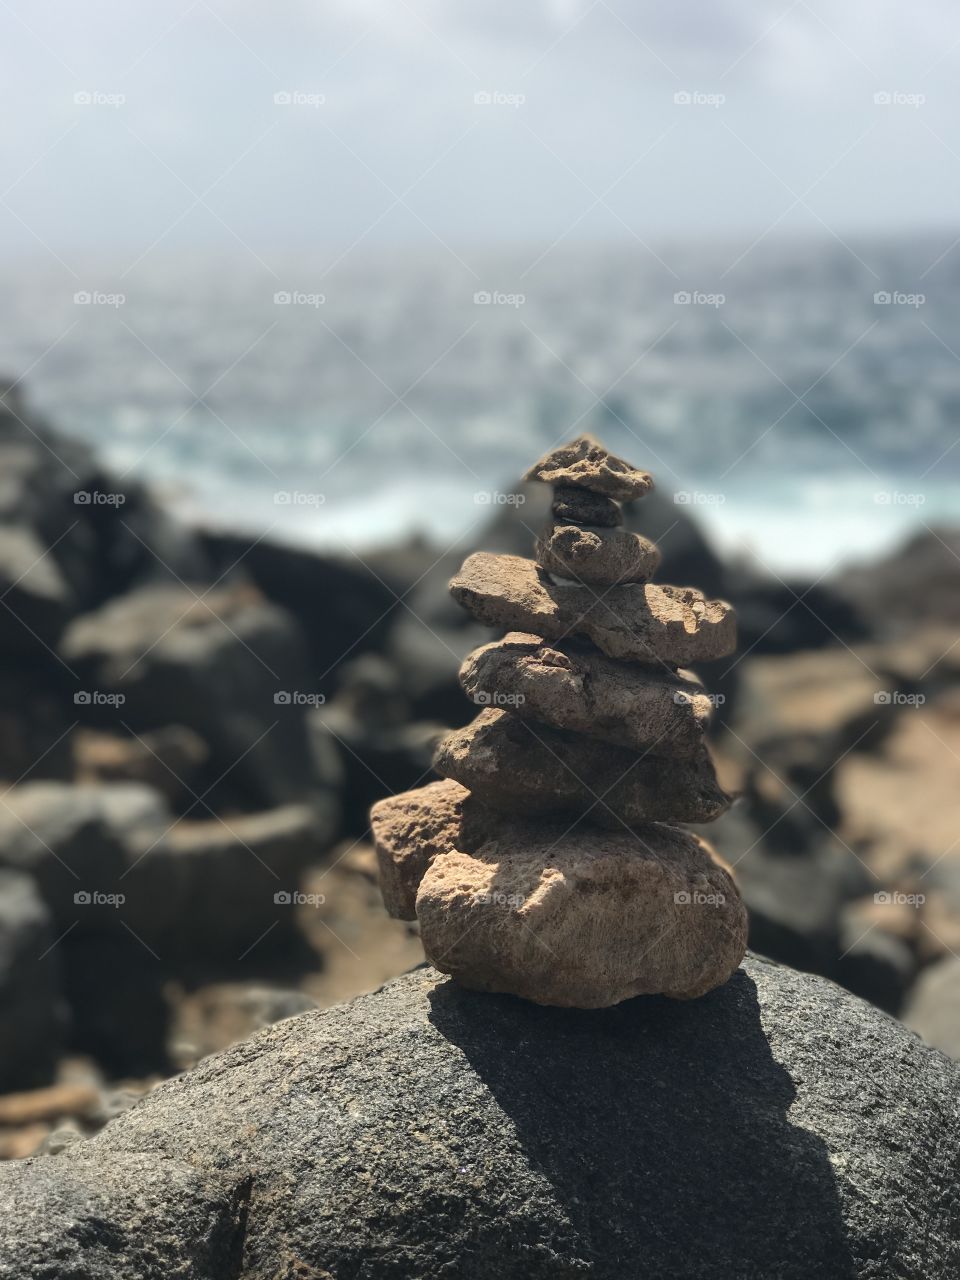 Wishing Rocks